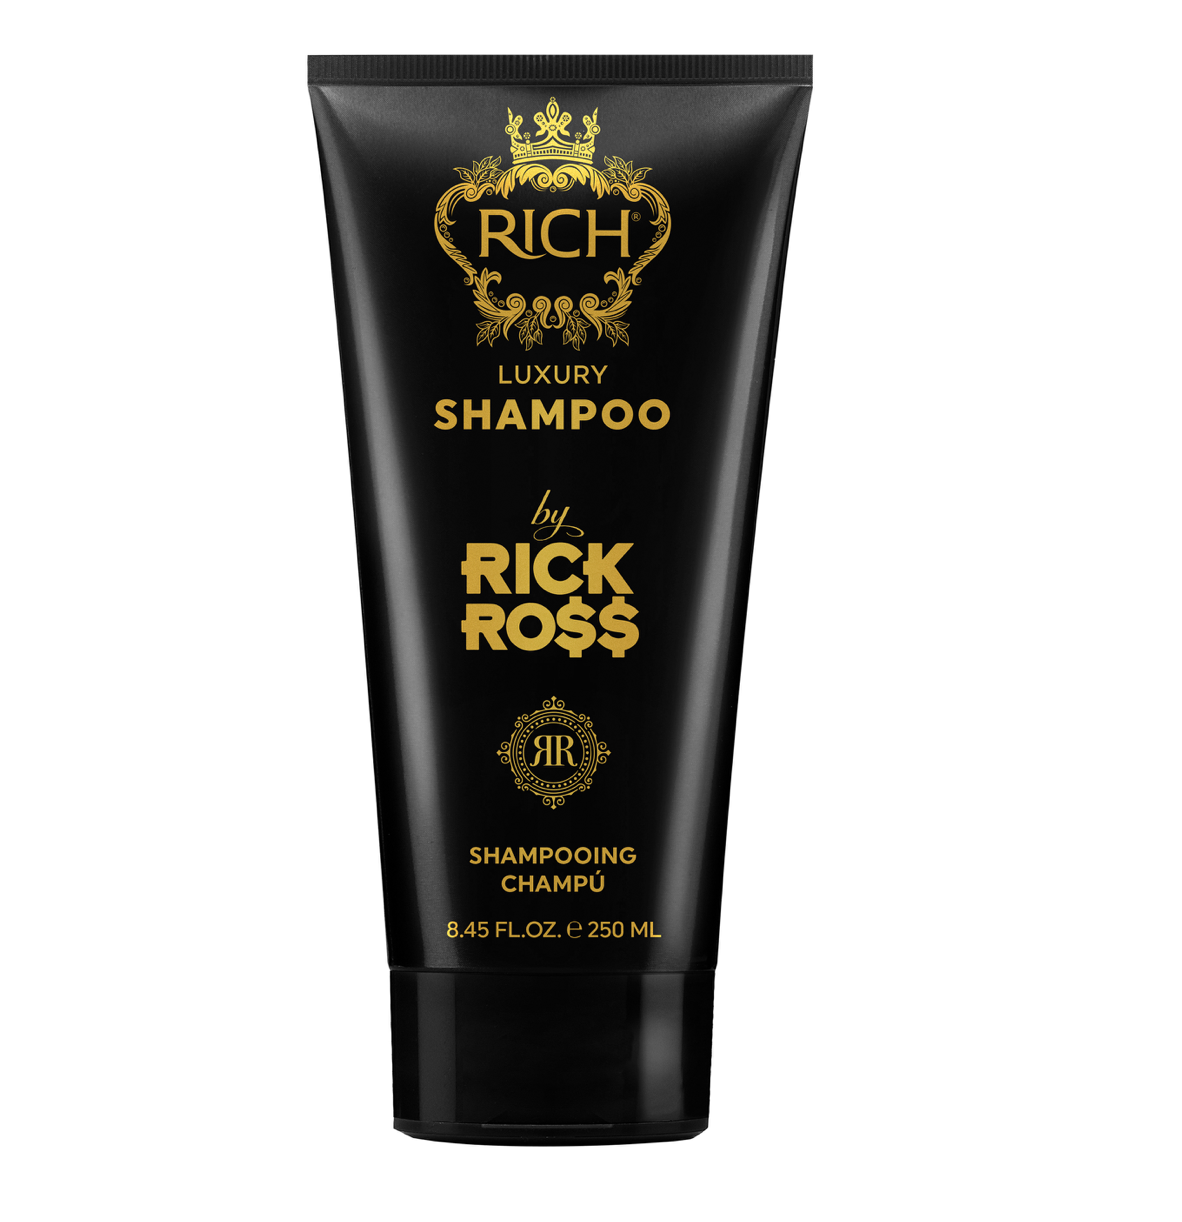 RICH by Rick Ross Luxury Shampoo 250 ml